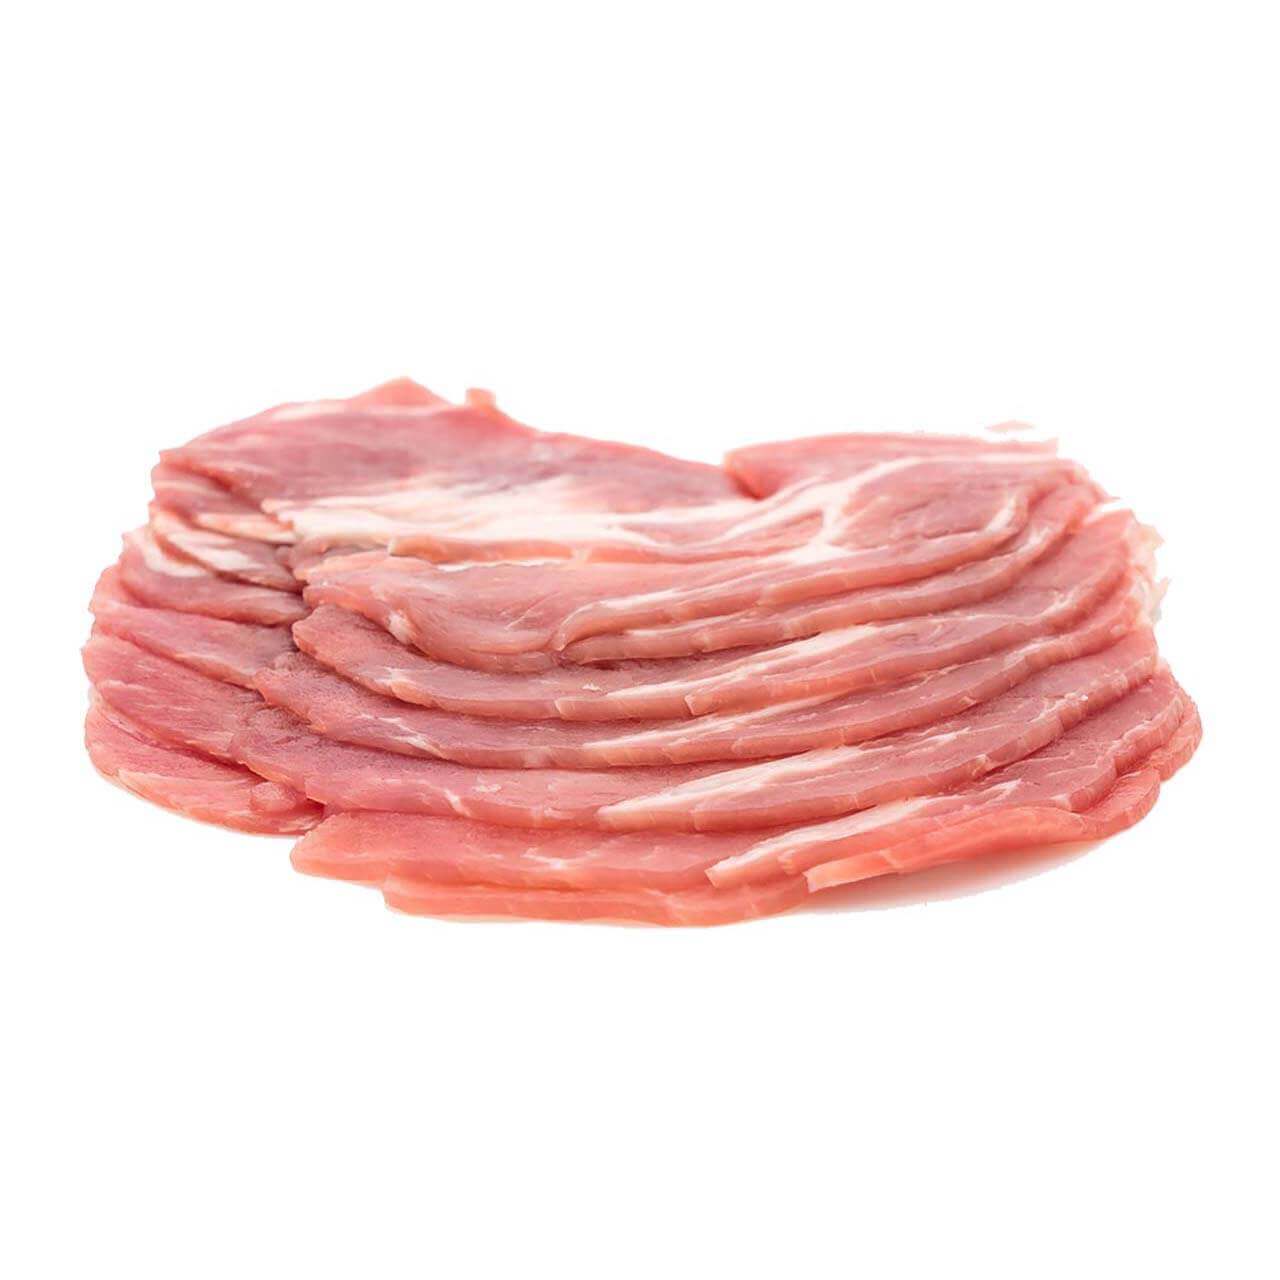 Pork Belly - Sliced - Organic